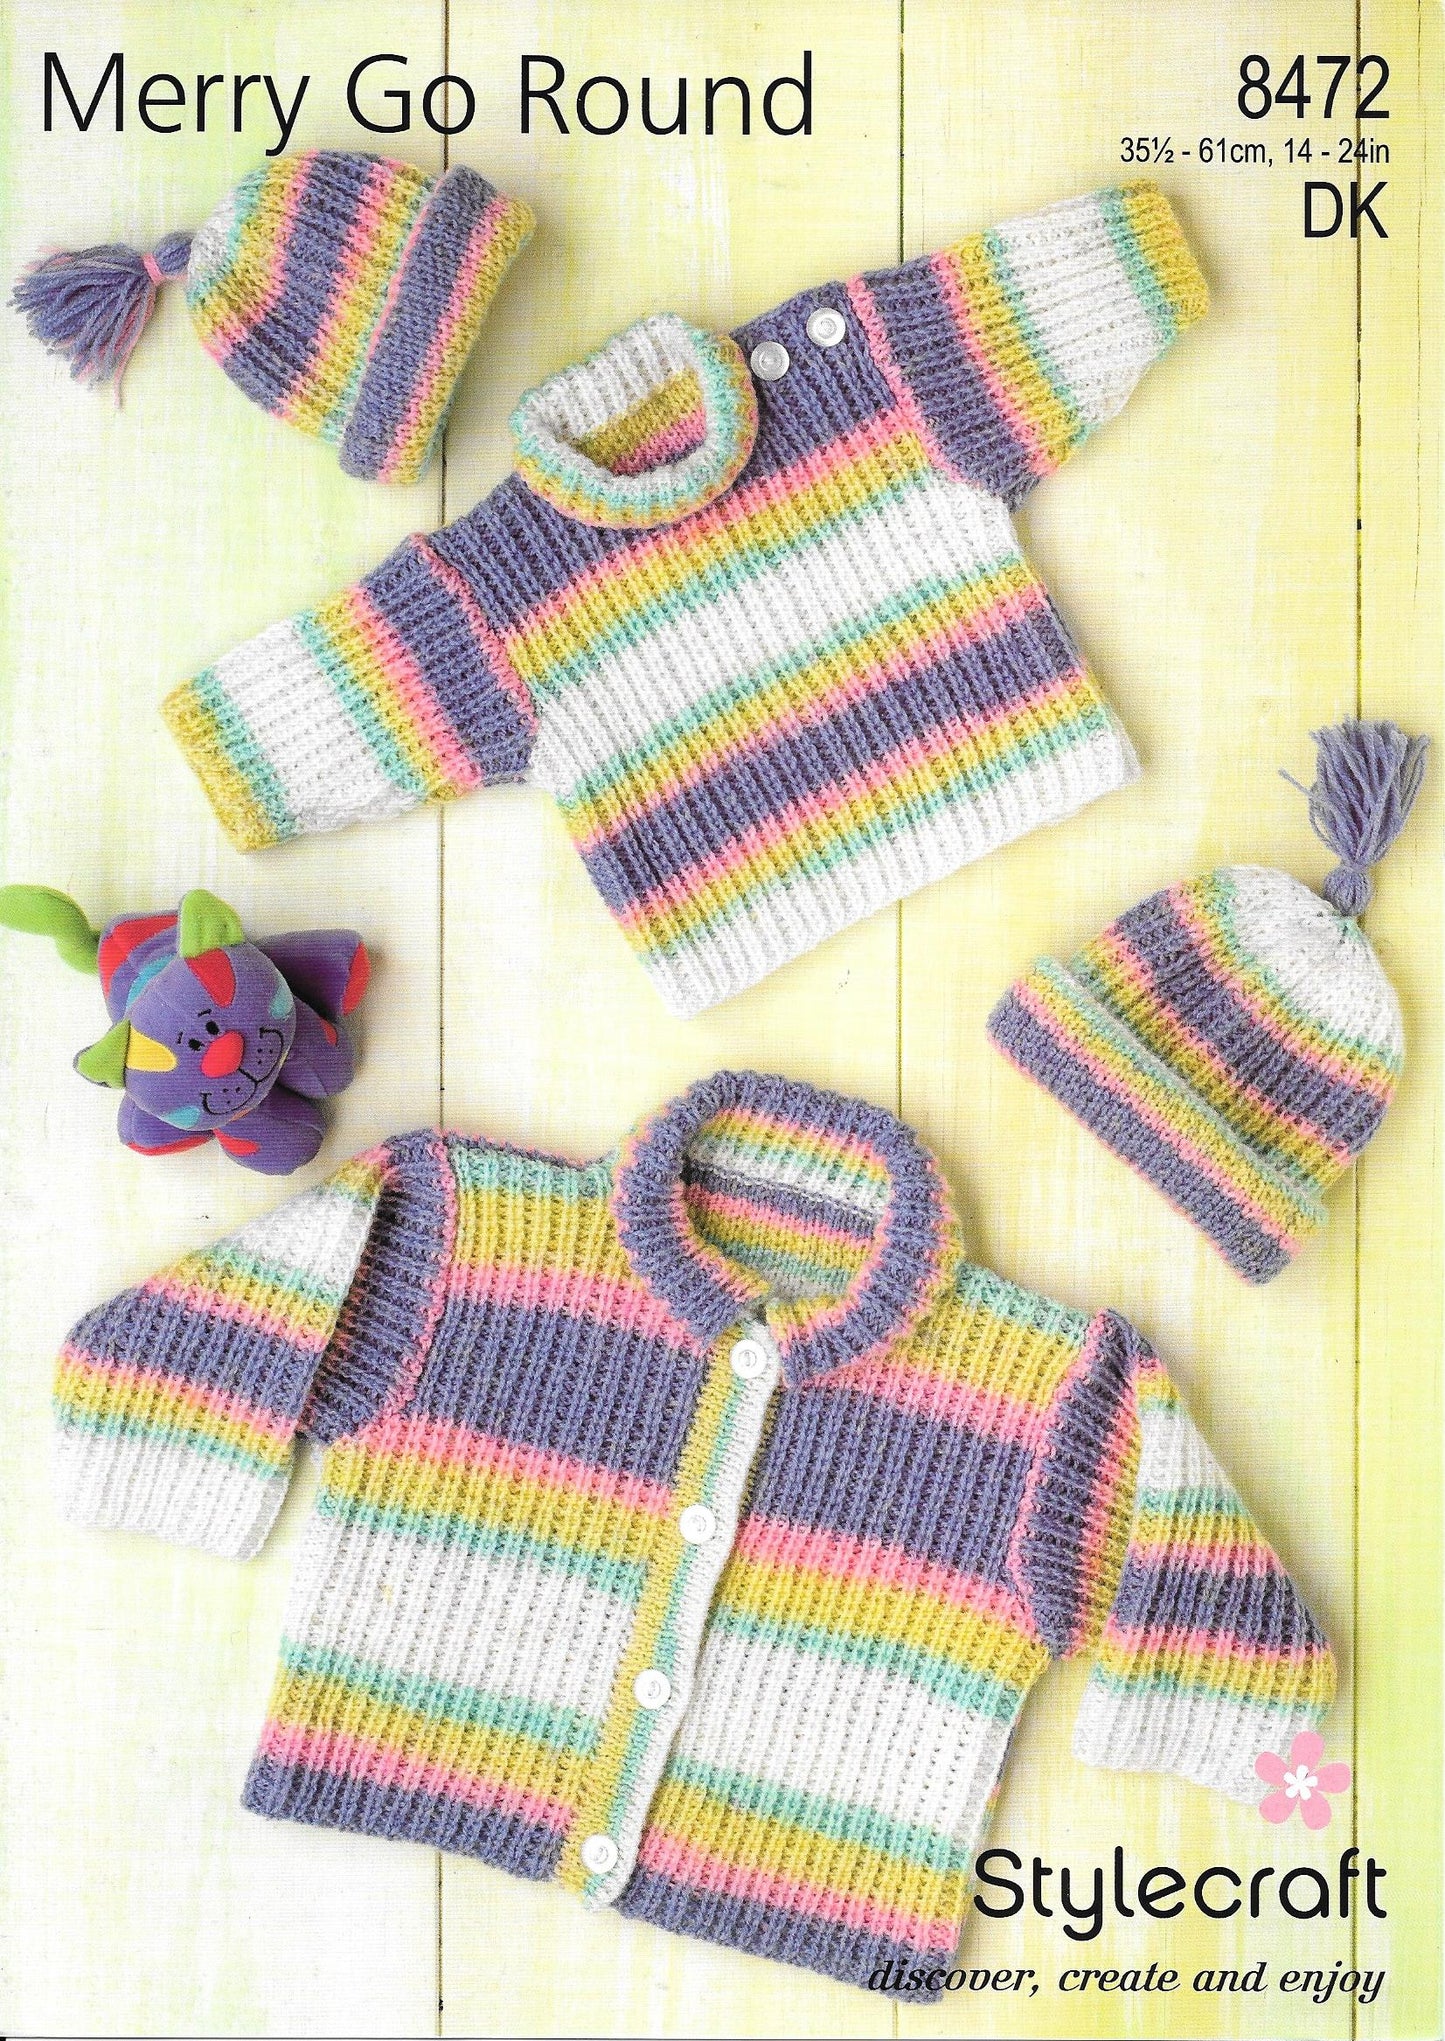 8472 Stylecraft Knitting Pattern. Sweater, Cardigan and hat. DK 14-24" chest